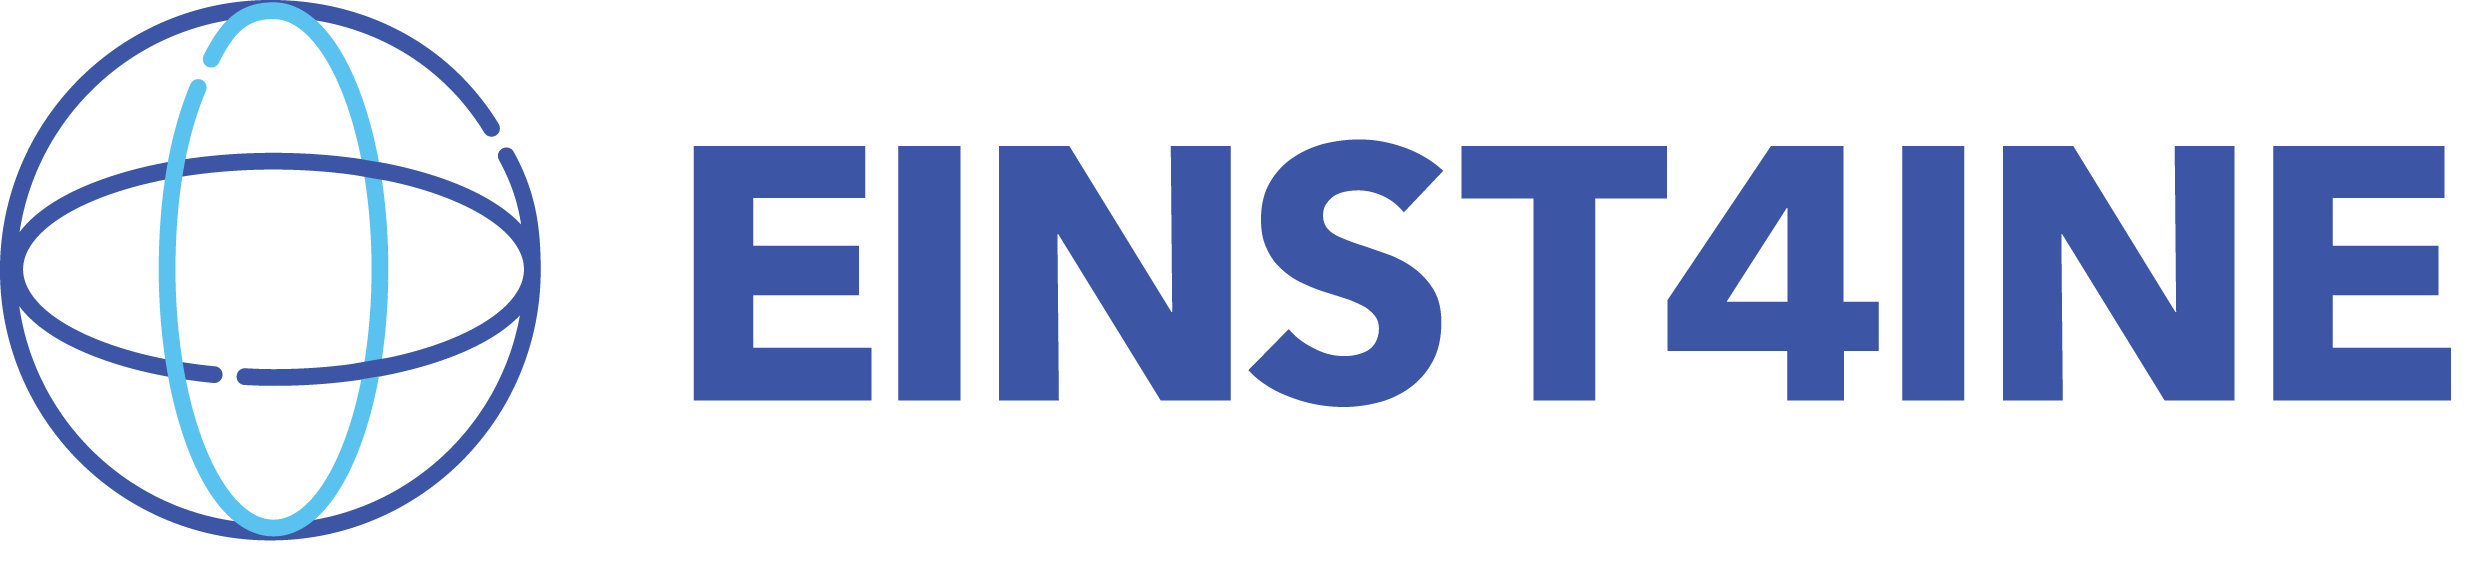 cropped-EINST4INE-logo.png